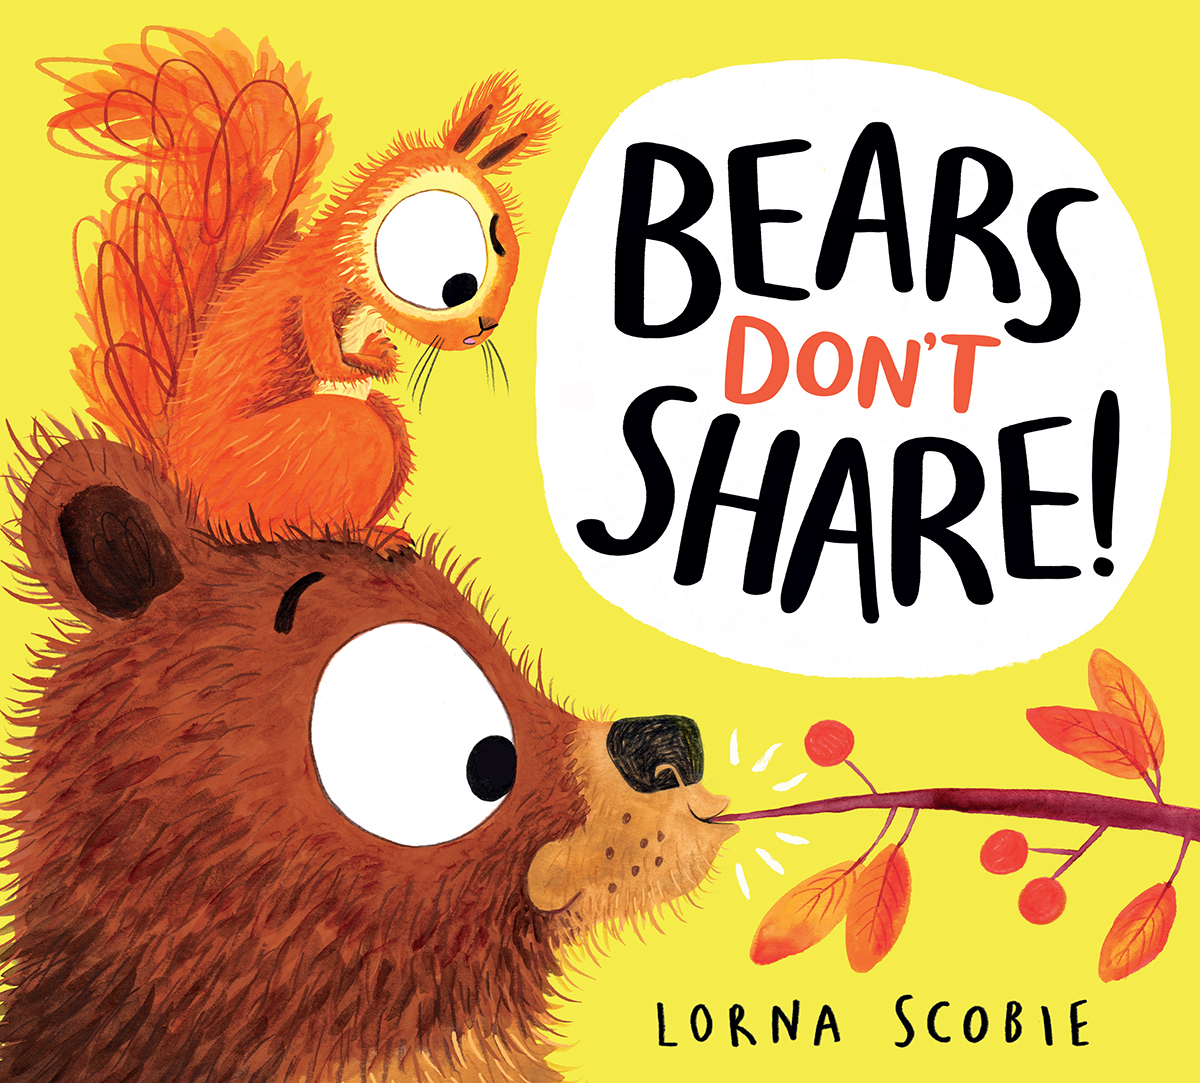  Bears Don't Share! 